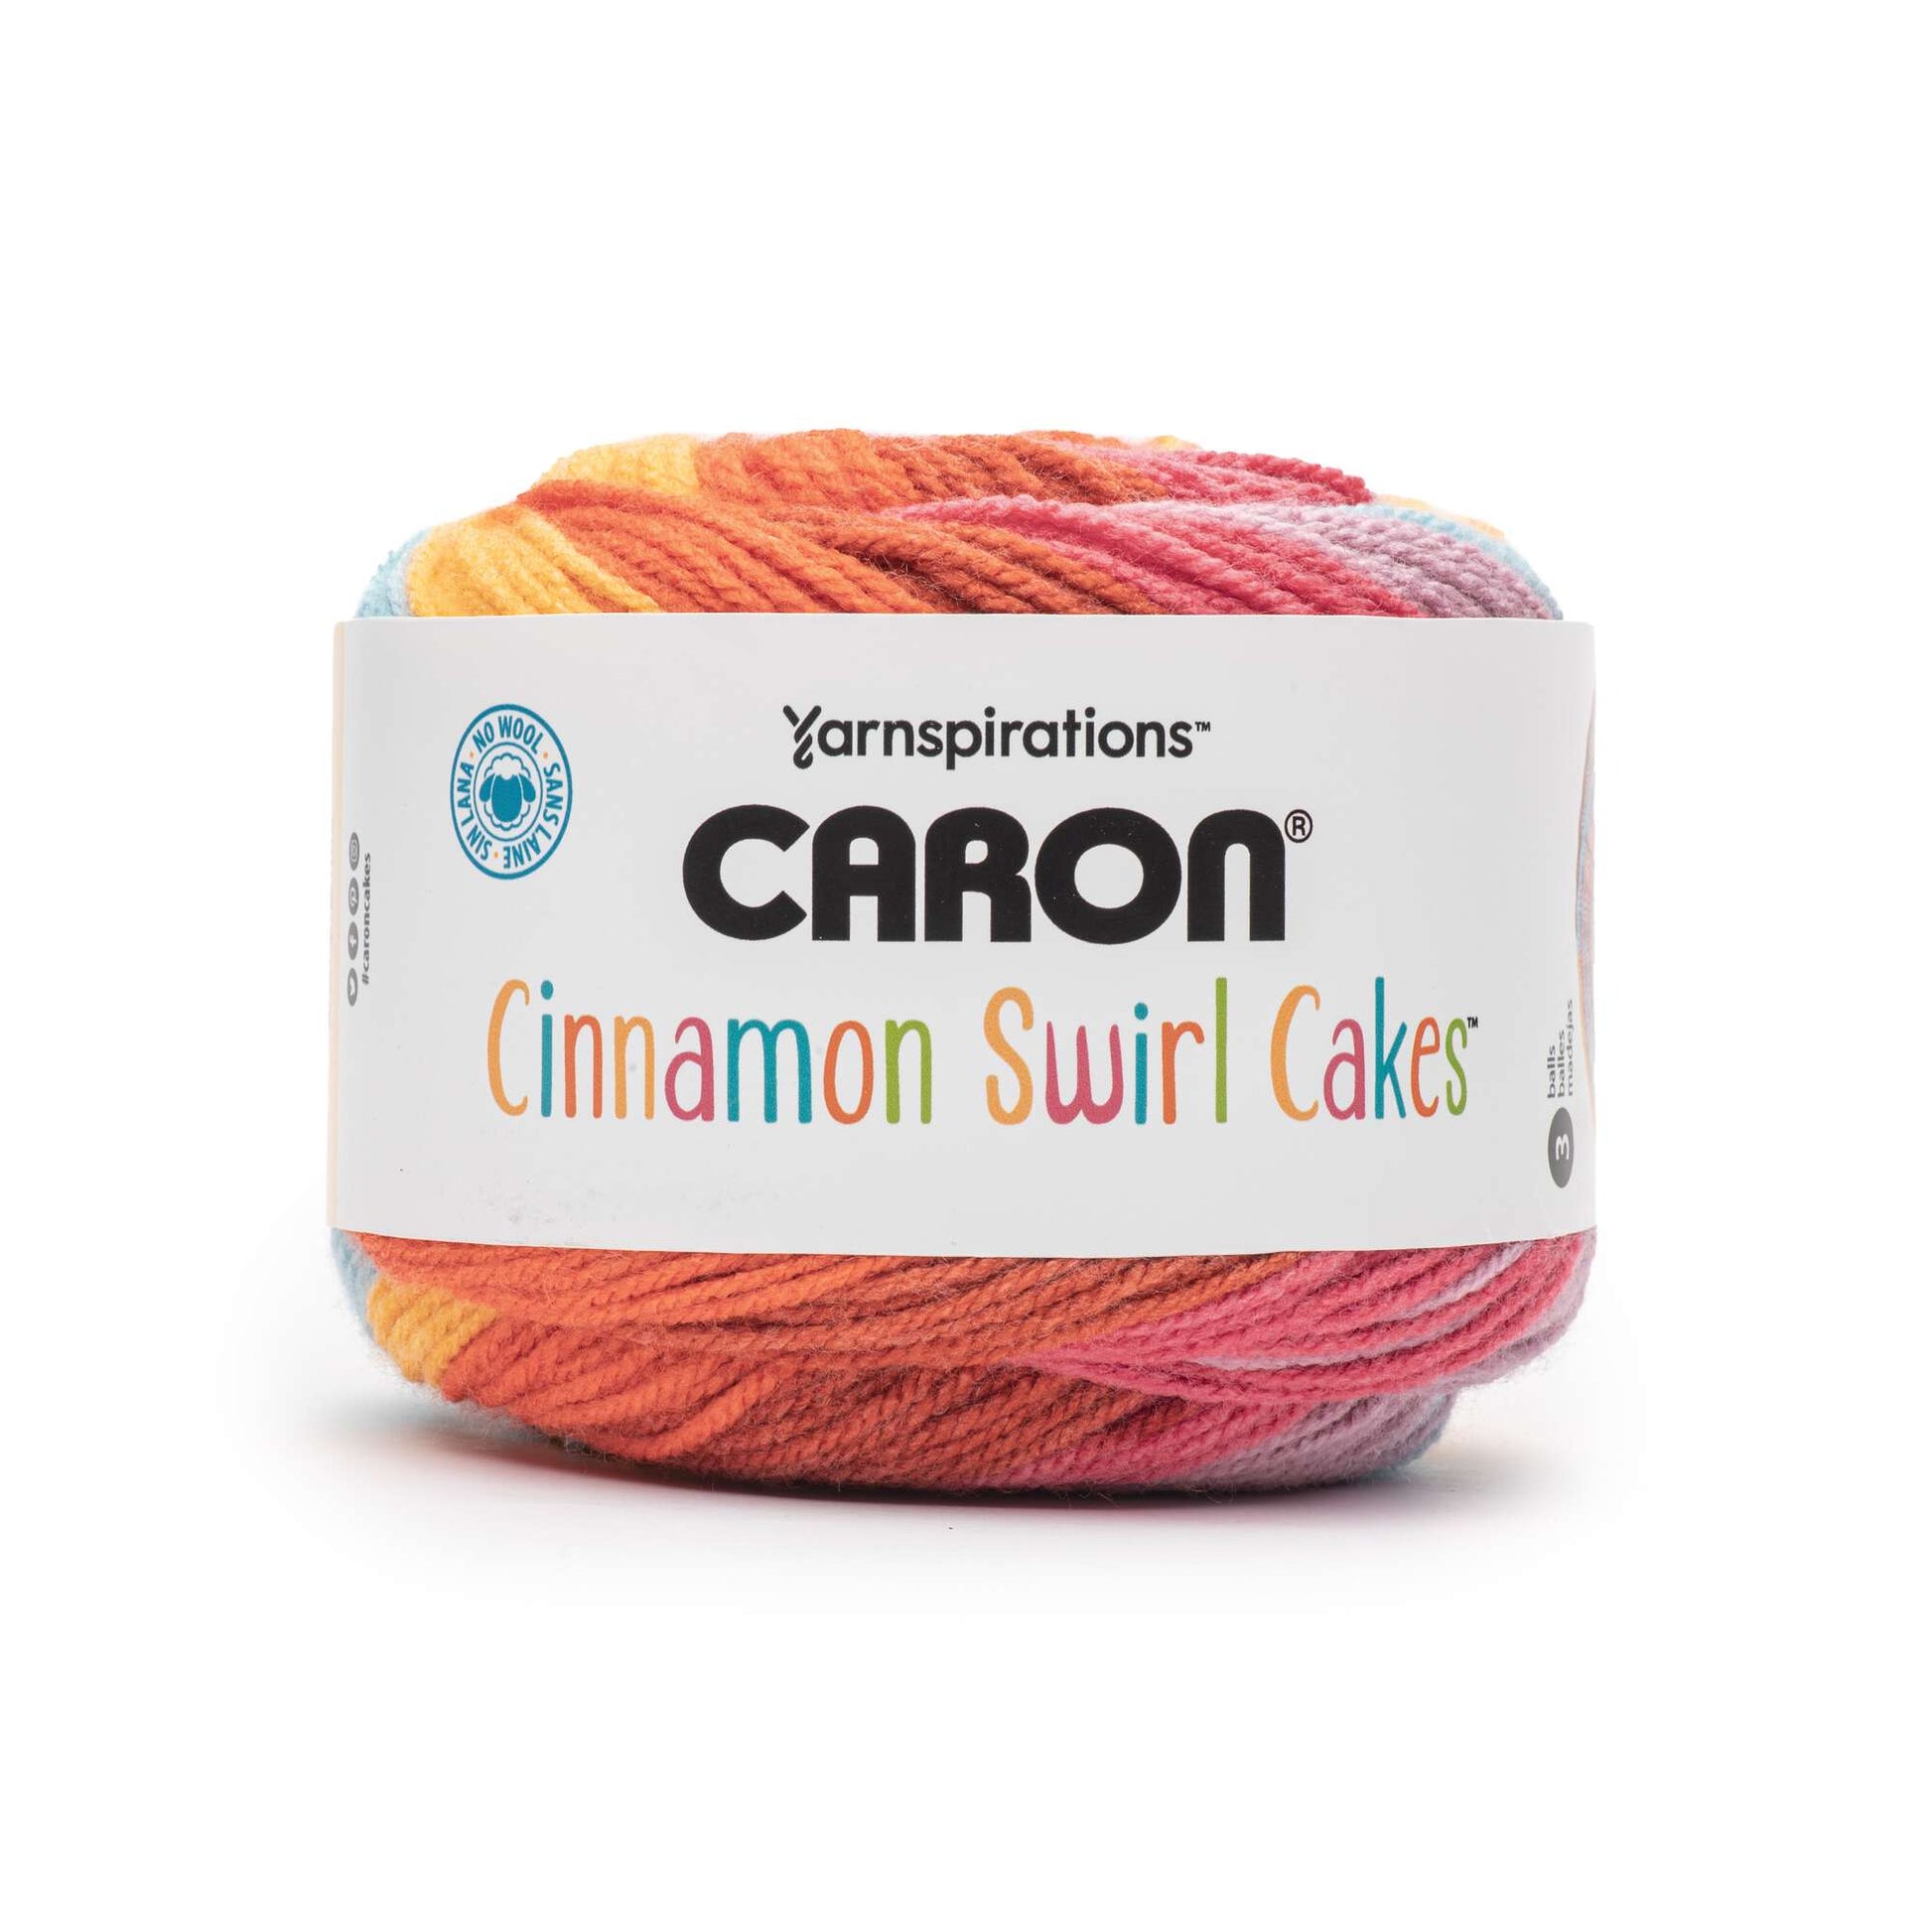 Caron Cinnamon Swirl Cakes Yarn -lilac & Lime